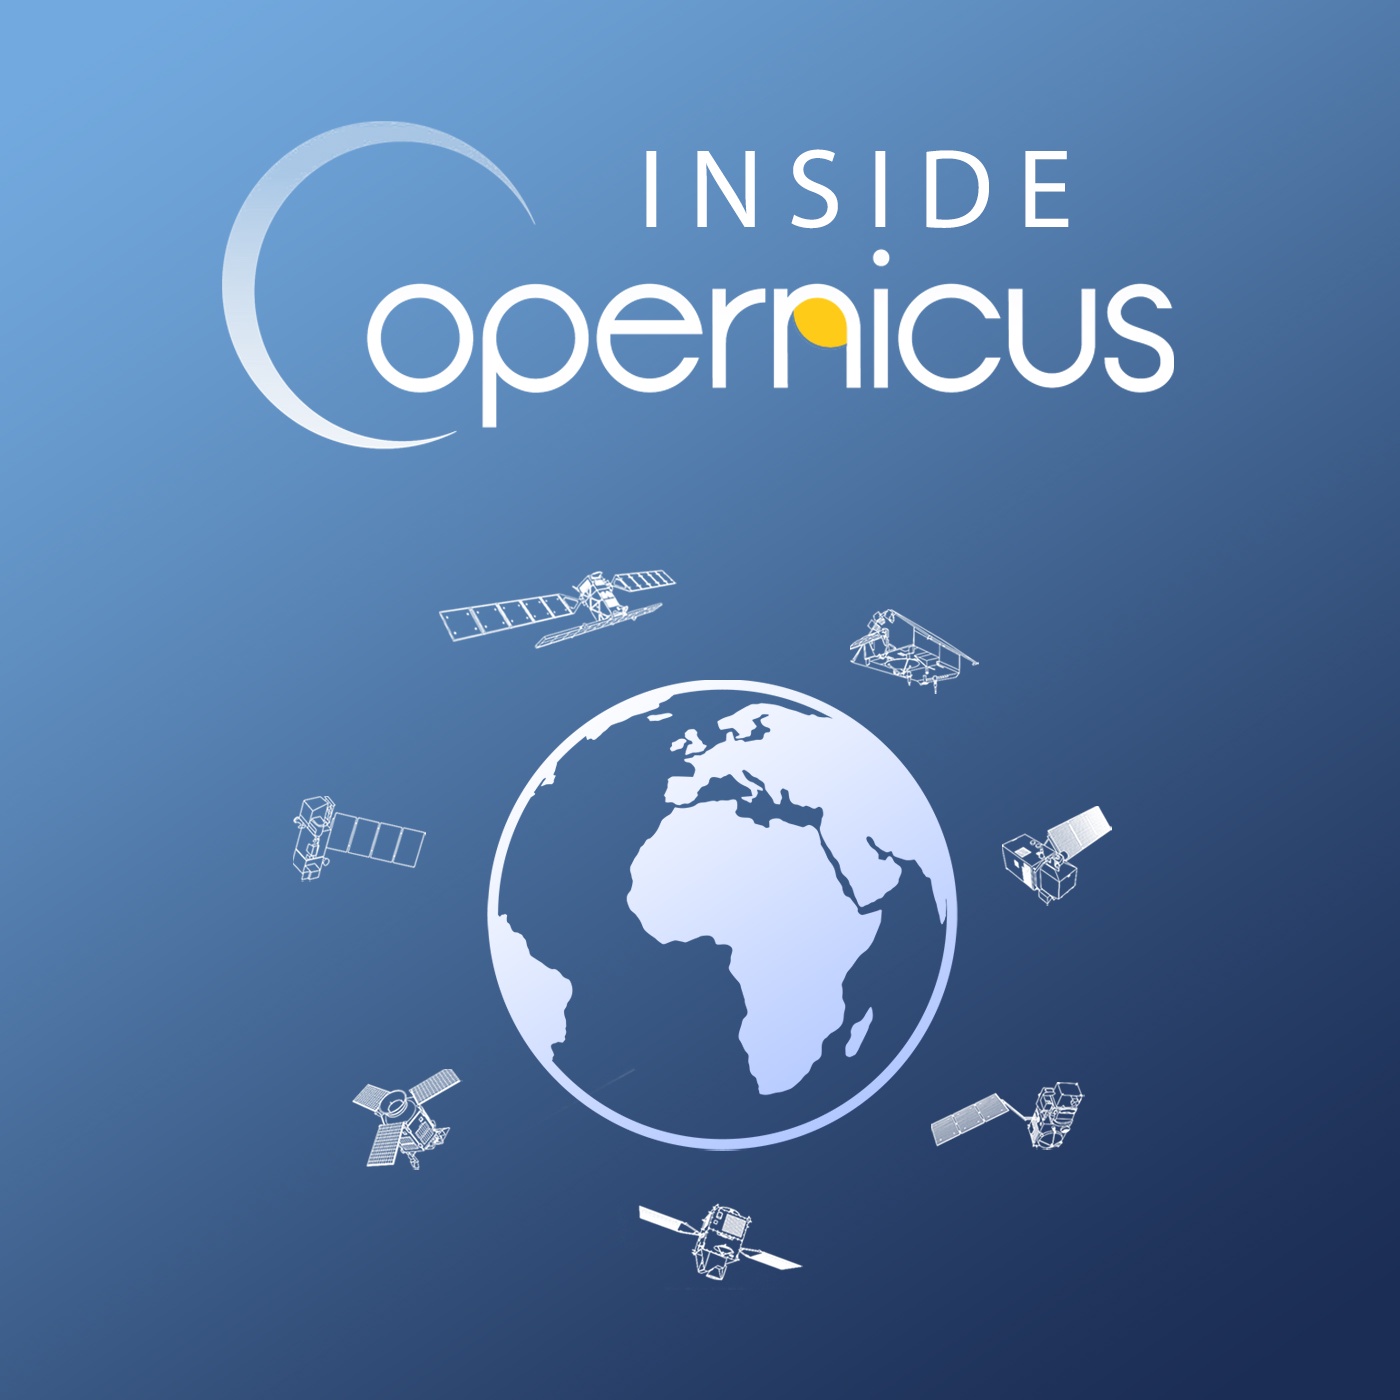 Inside Copernicus - Europas Blick auf die Erde